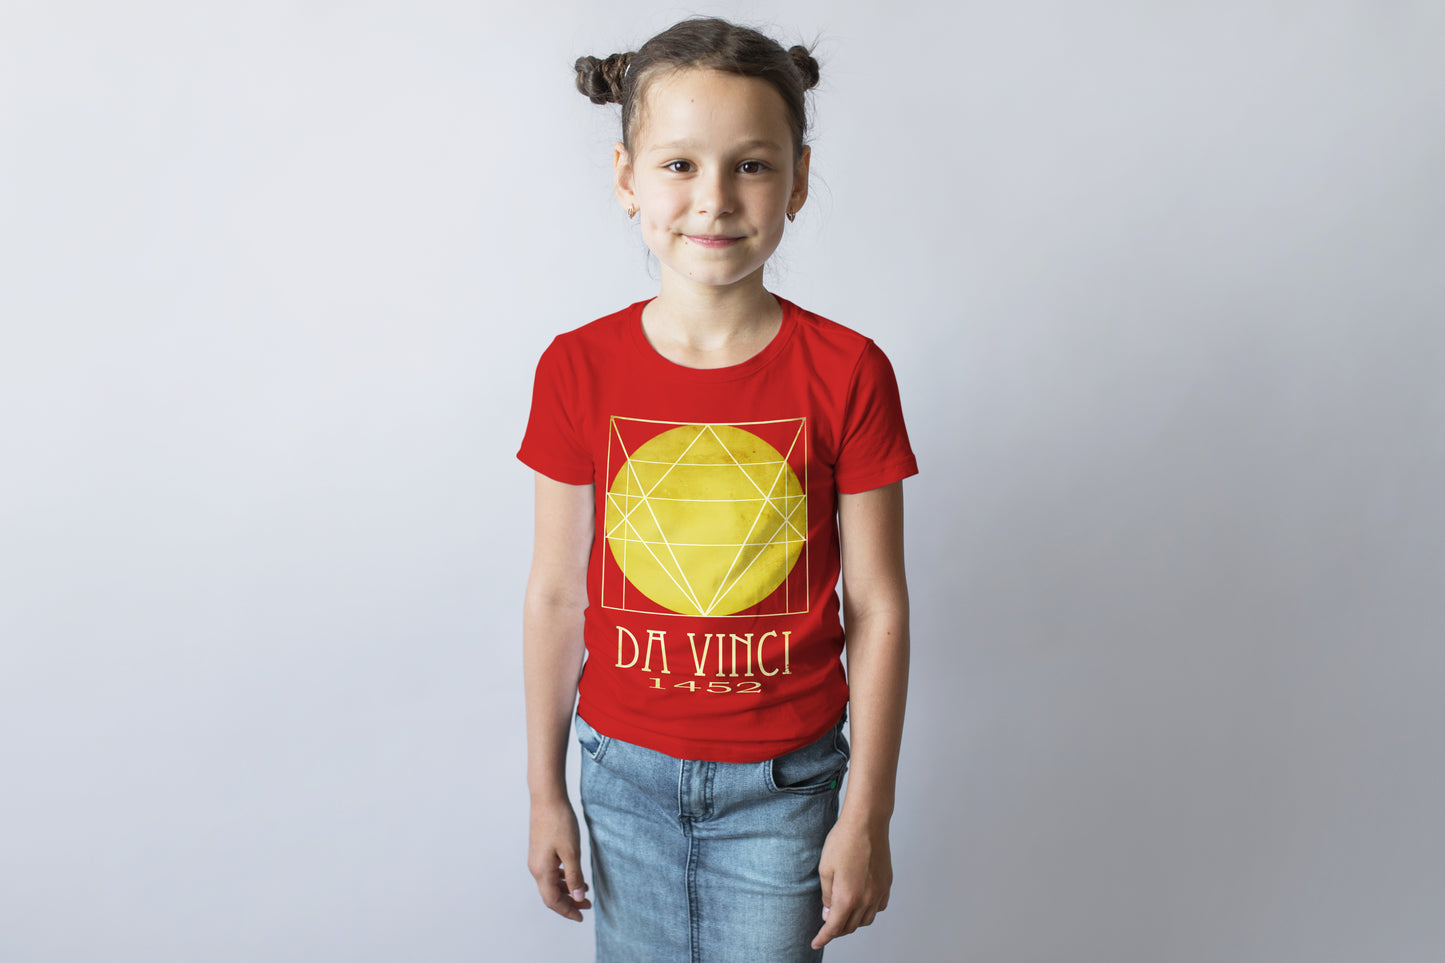 Da Vinci Vitruvian Man T-shirt, Minimalist Science Graphic Tee